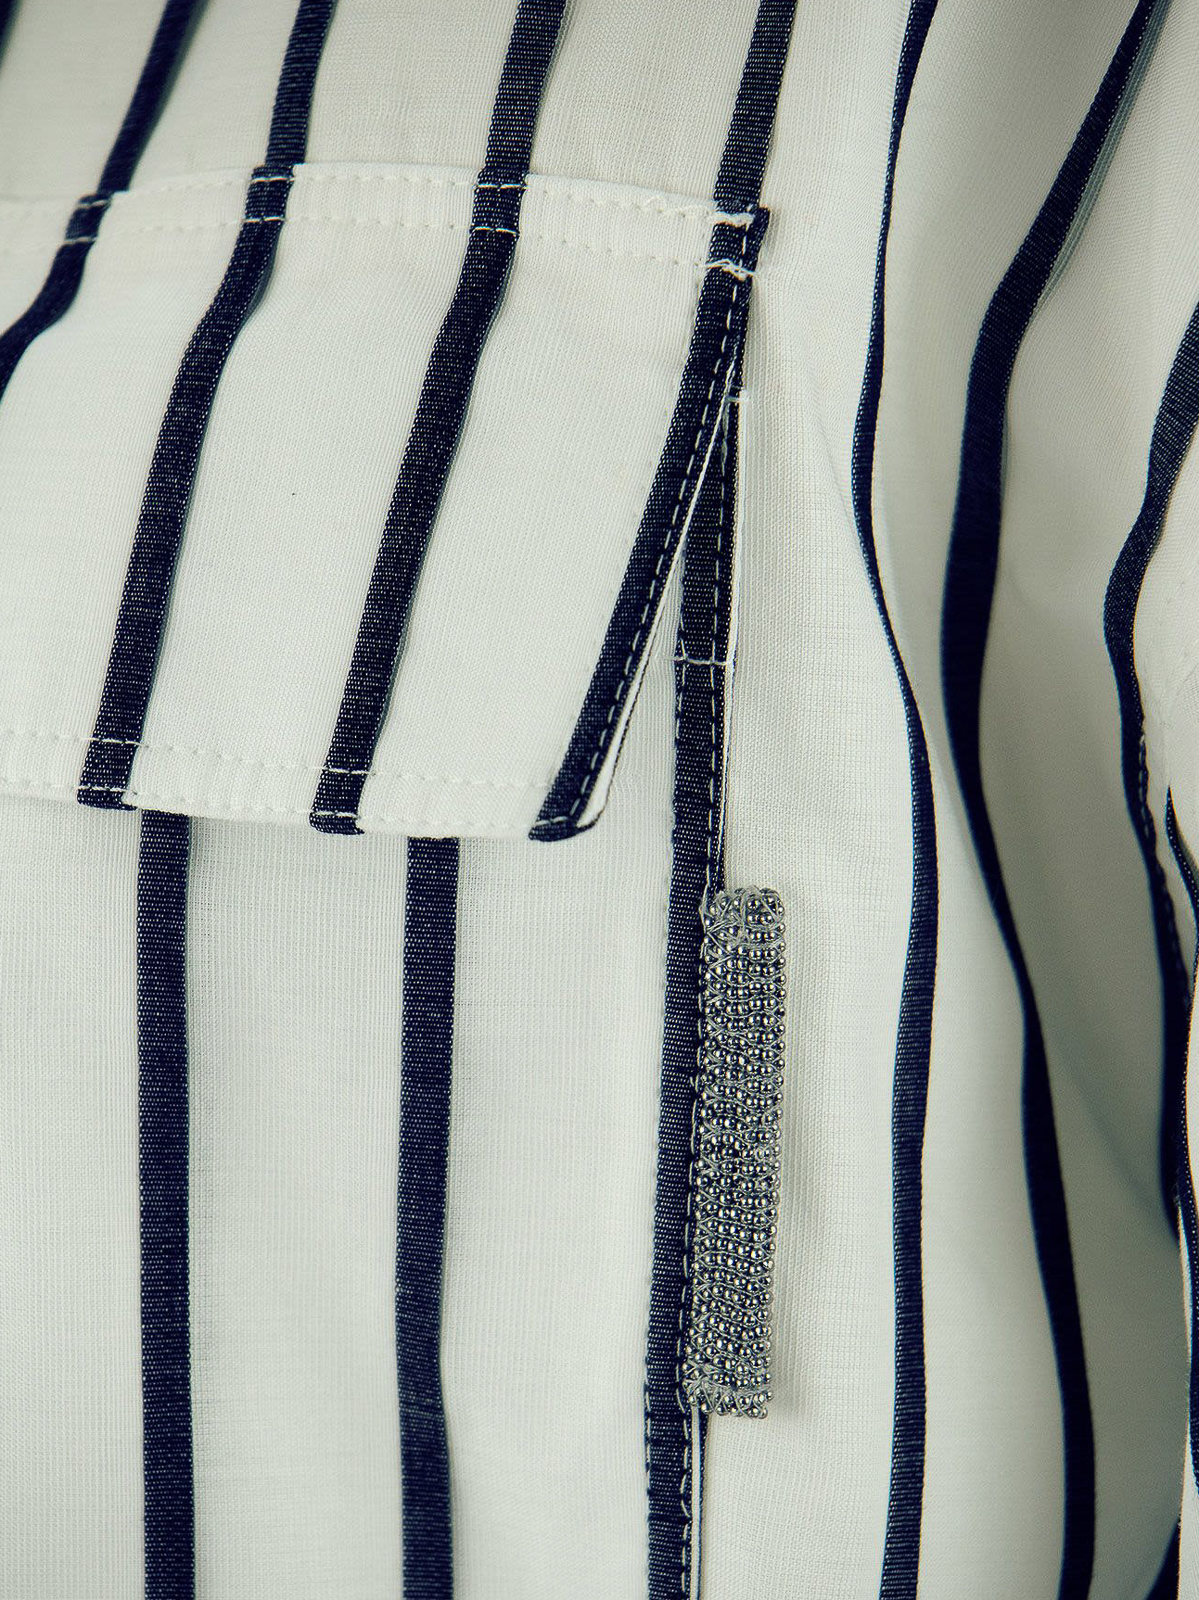 Blue V-neck striped cotton-blend maxi dress, Brunello Cucinelli